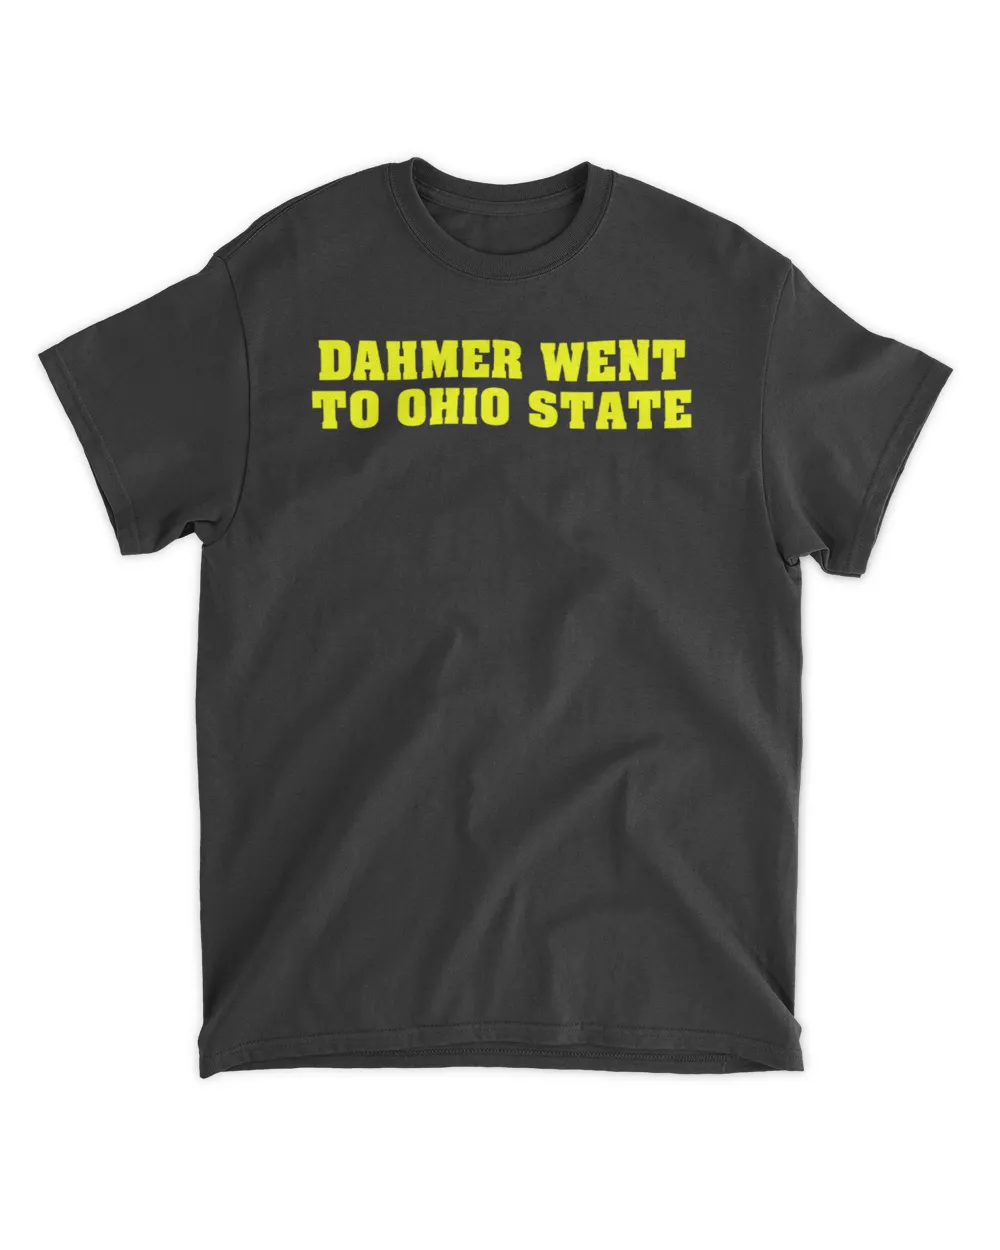  Dahmer went to Ohio state shirt